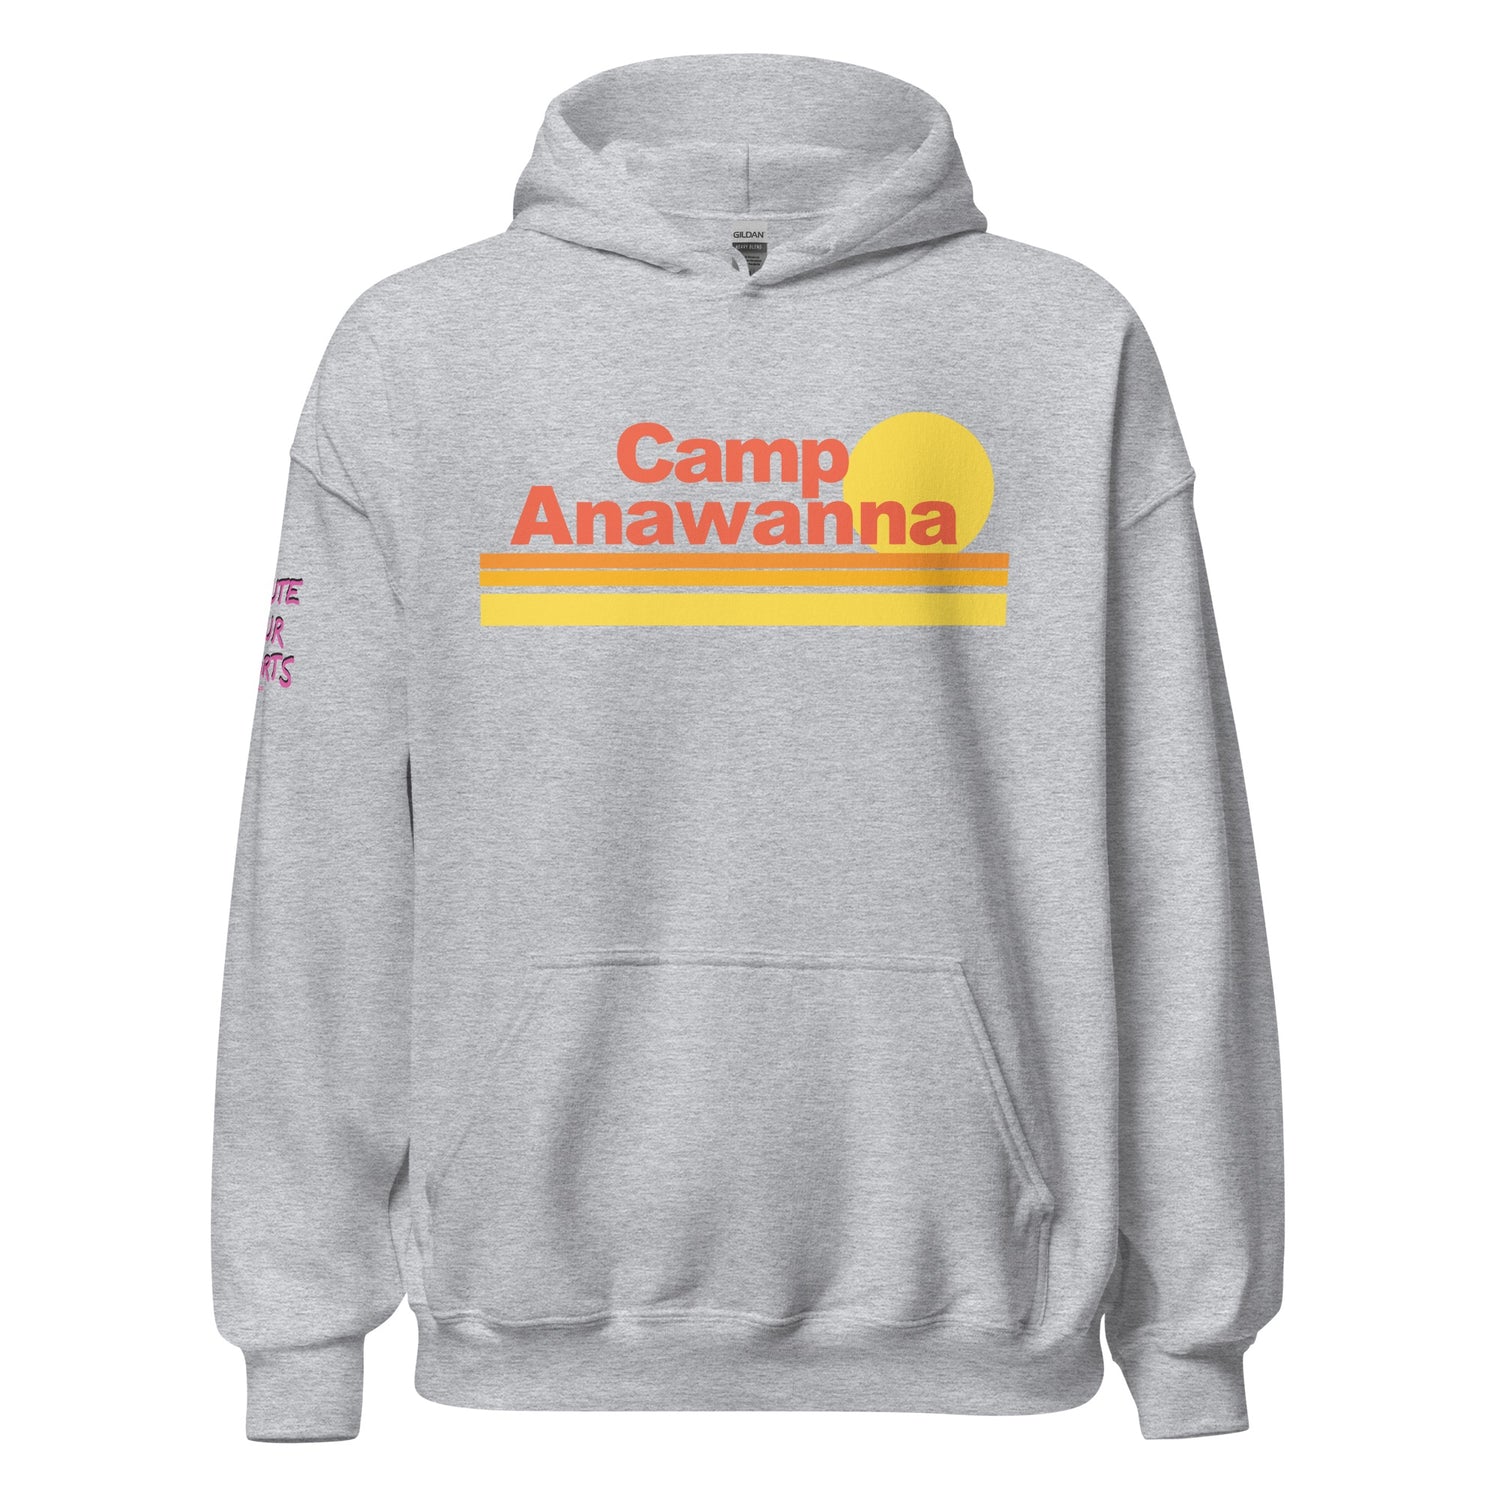 Salute Your Shorts Camp Anawanna Sunrise Hooded Sweatshirt